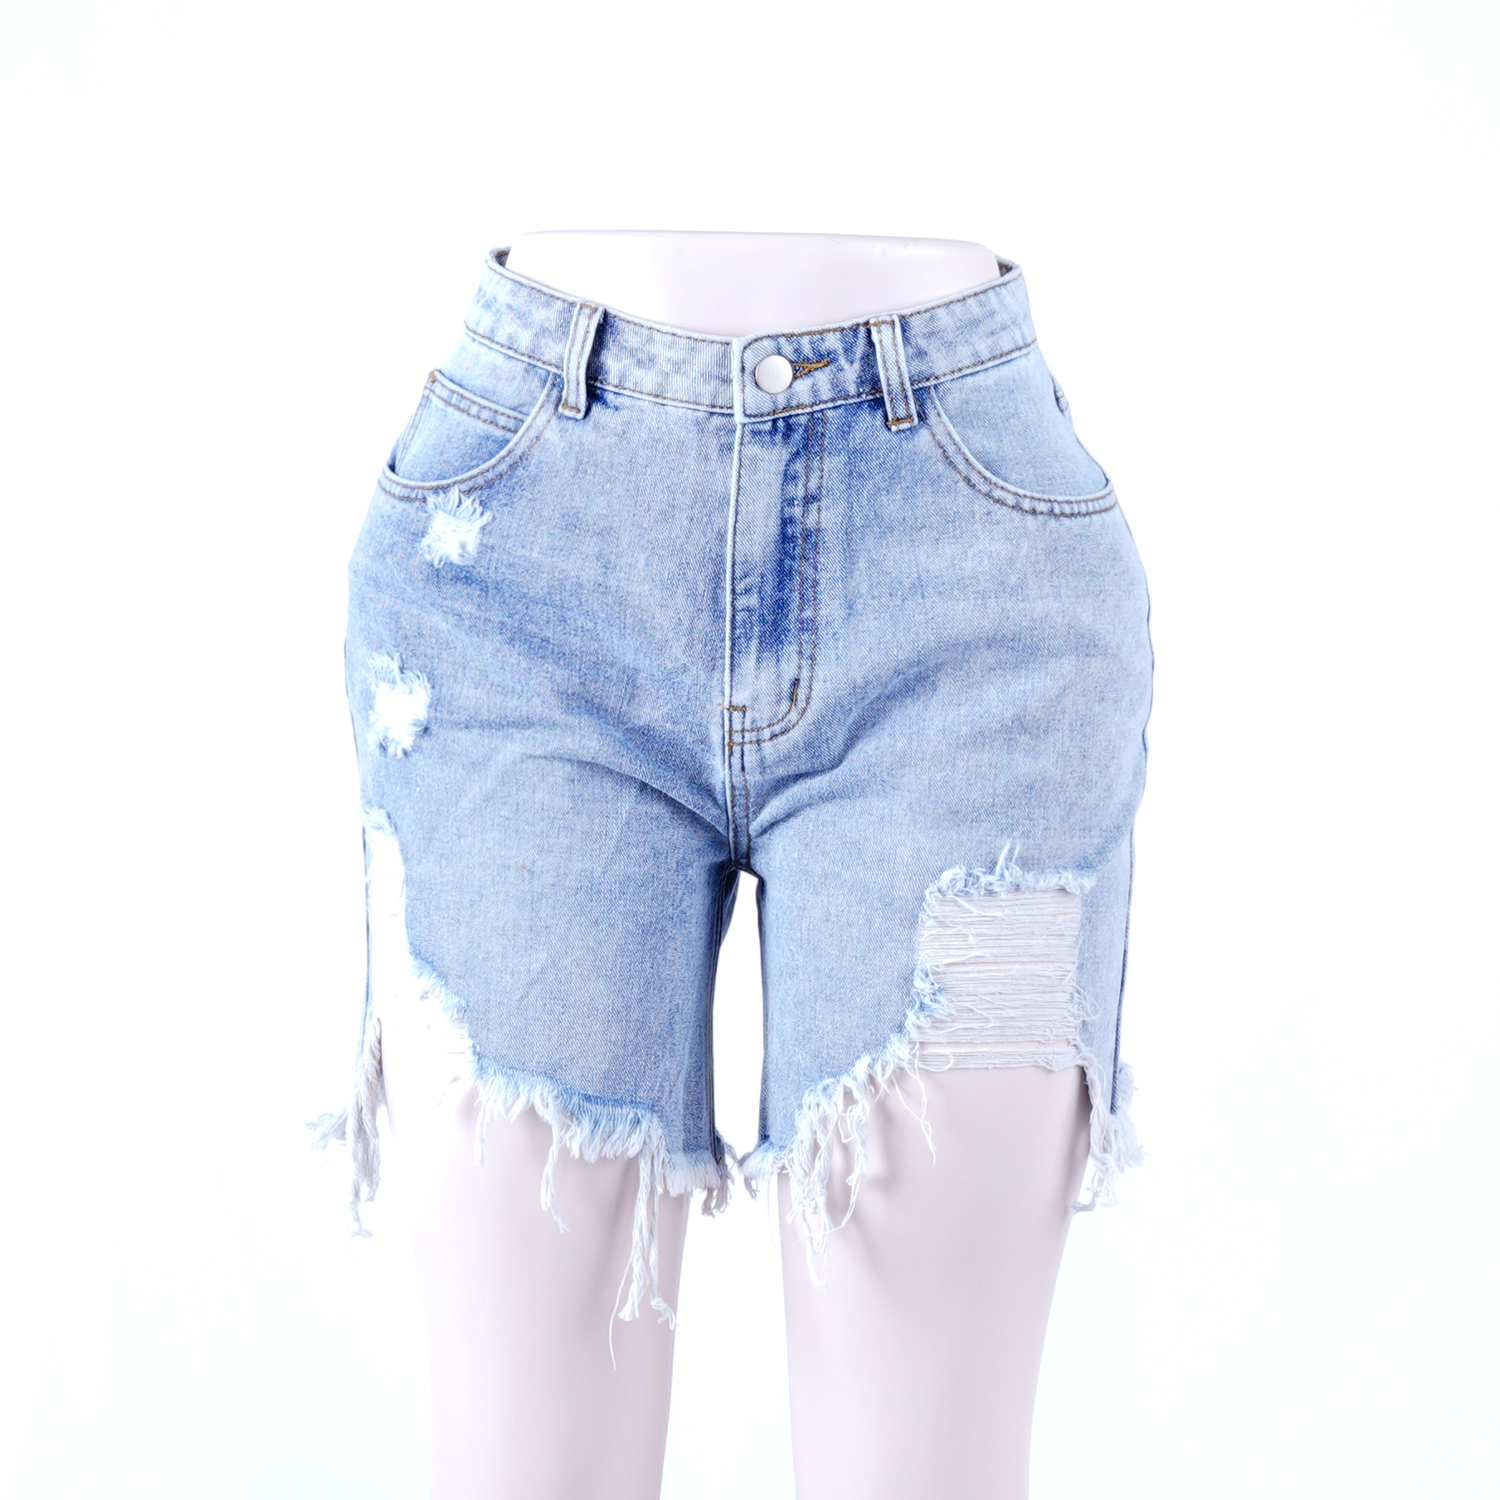 SKYKINGDOM wholesale fashion jeans shorts skinny lady femme stretch casual blue ripped denim shorts